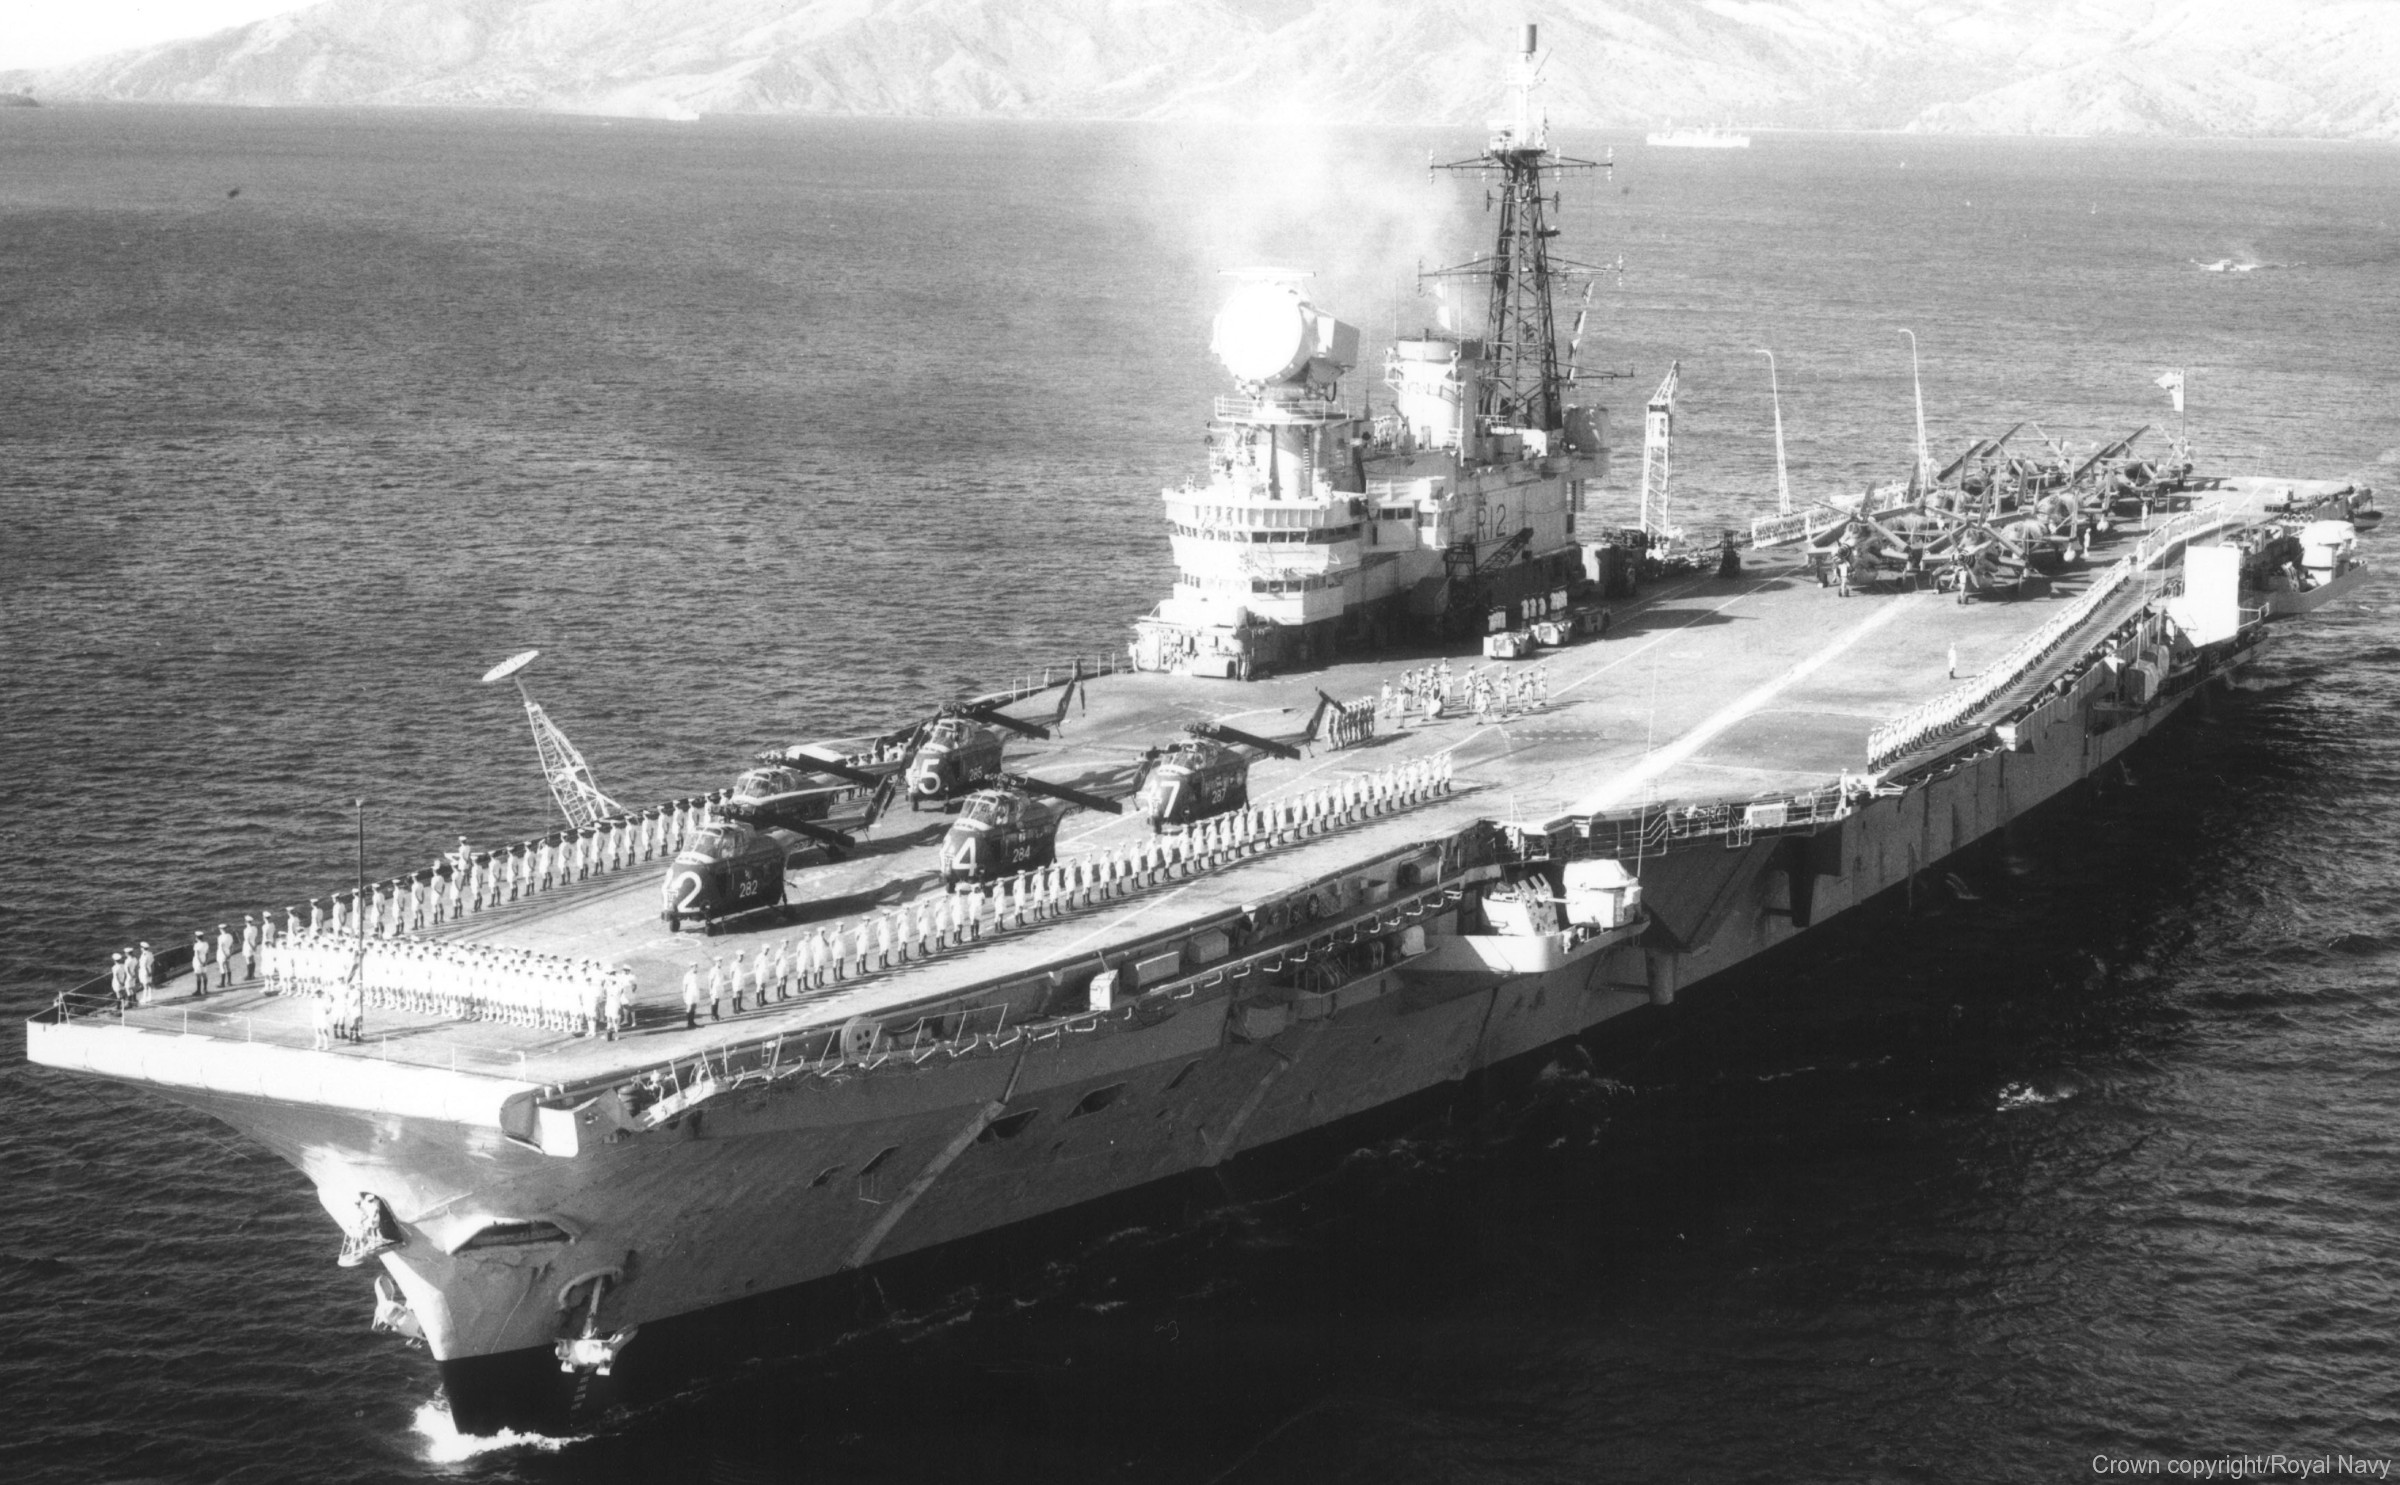 HMS Invincible returns home following the Falklands War 